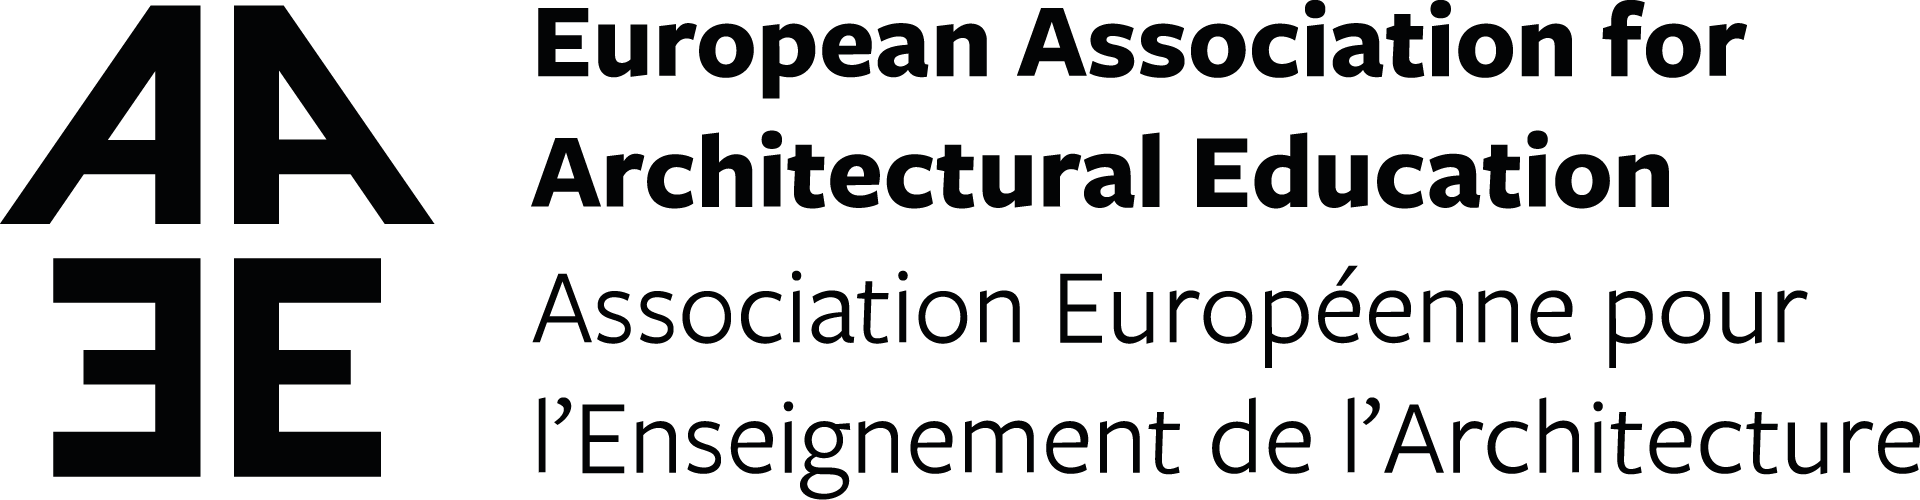 European Association for Architectural Education